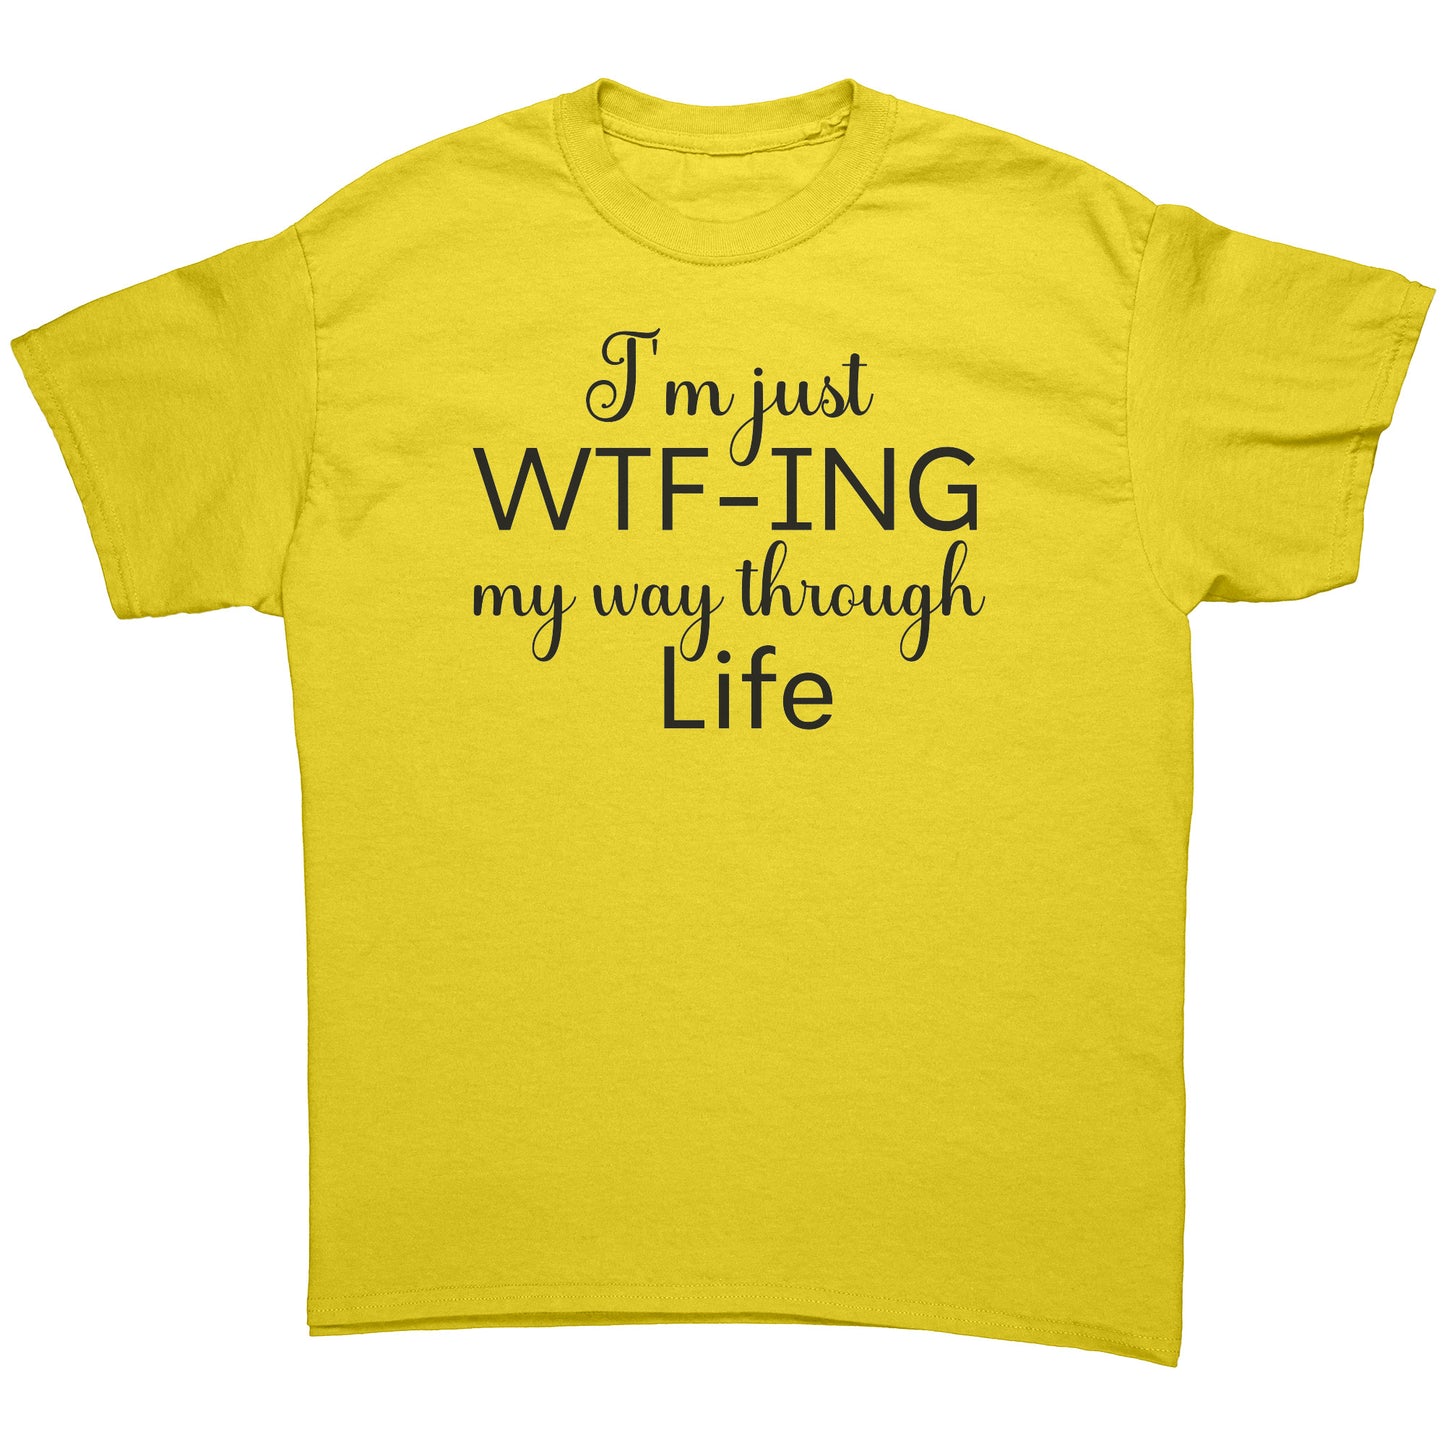 "I'm Just WTF-ing My Way Through Life" T-Shirt - Bold Statement Tee